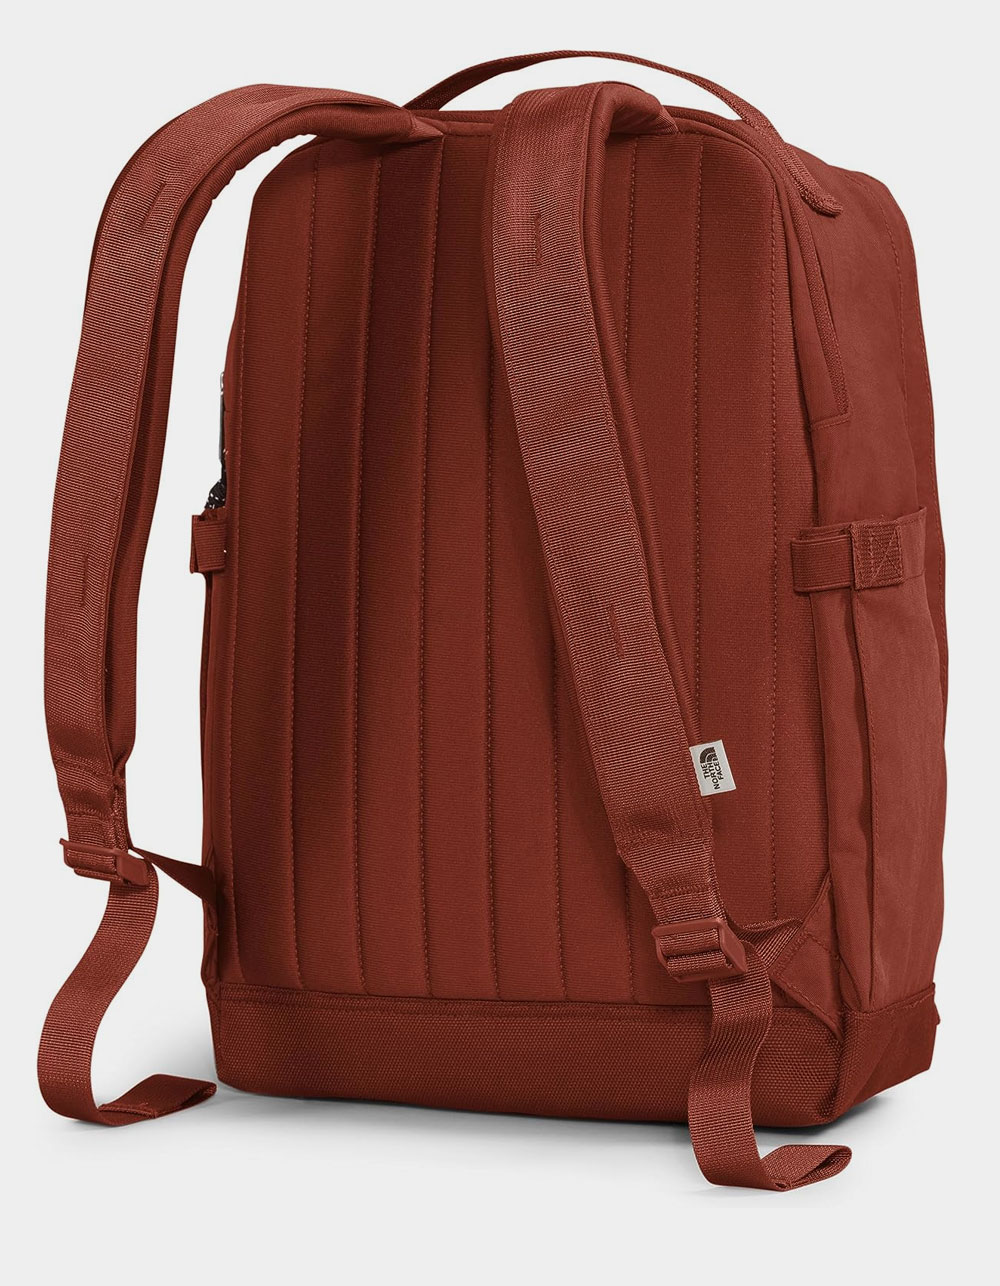 Dr. Martens Y2K Unisex Leather Messenger Satchel Bag Featuring 